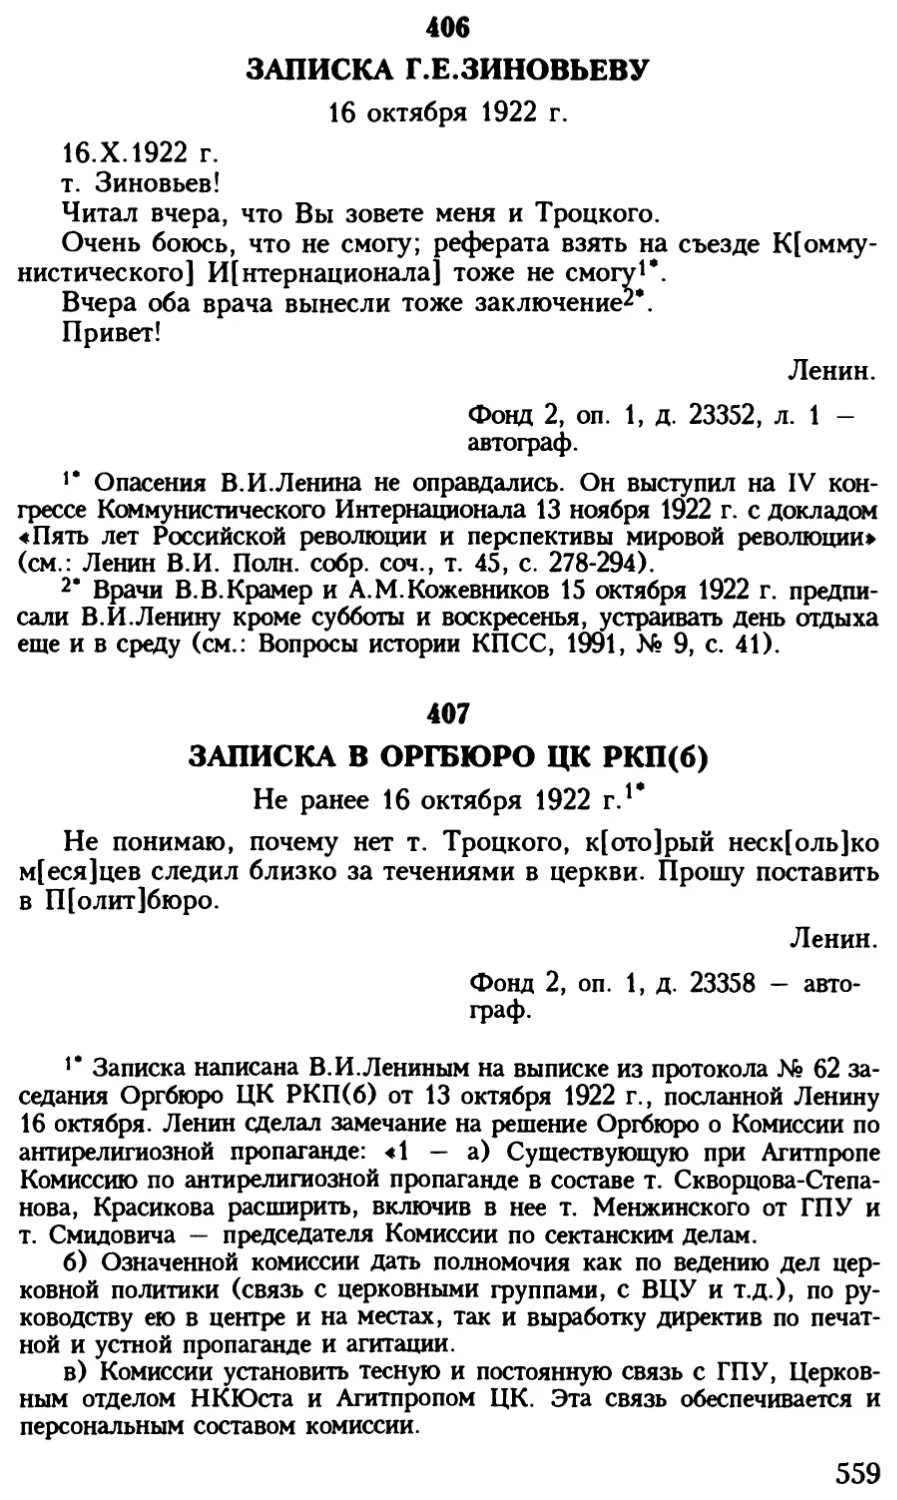 406. Записка Г.Е.Зиновьеву. 16 октября 1922 г